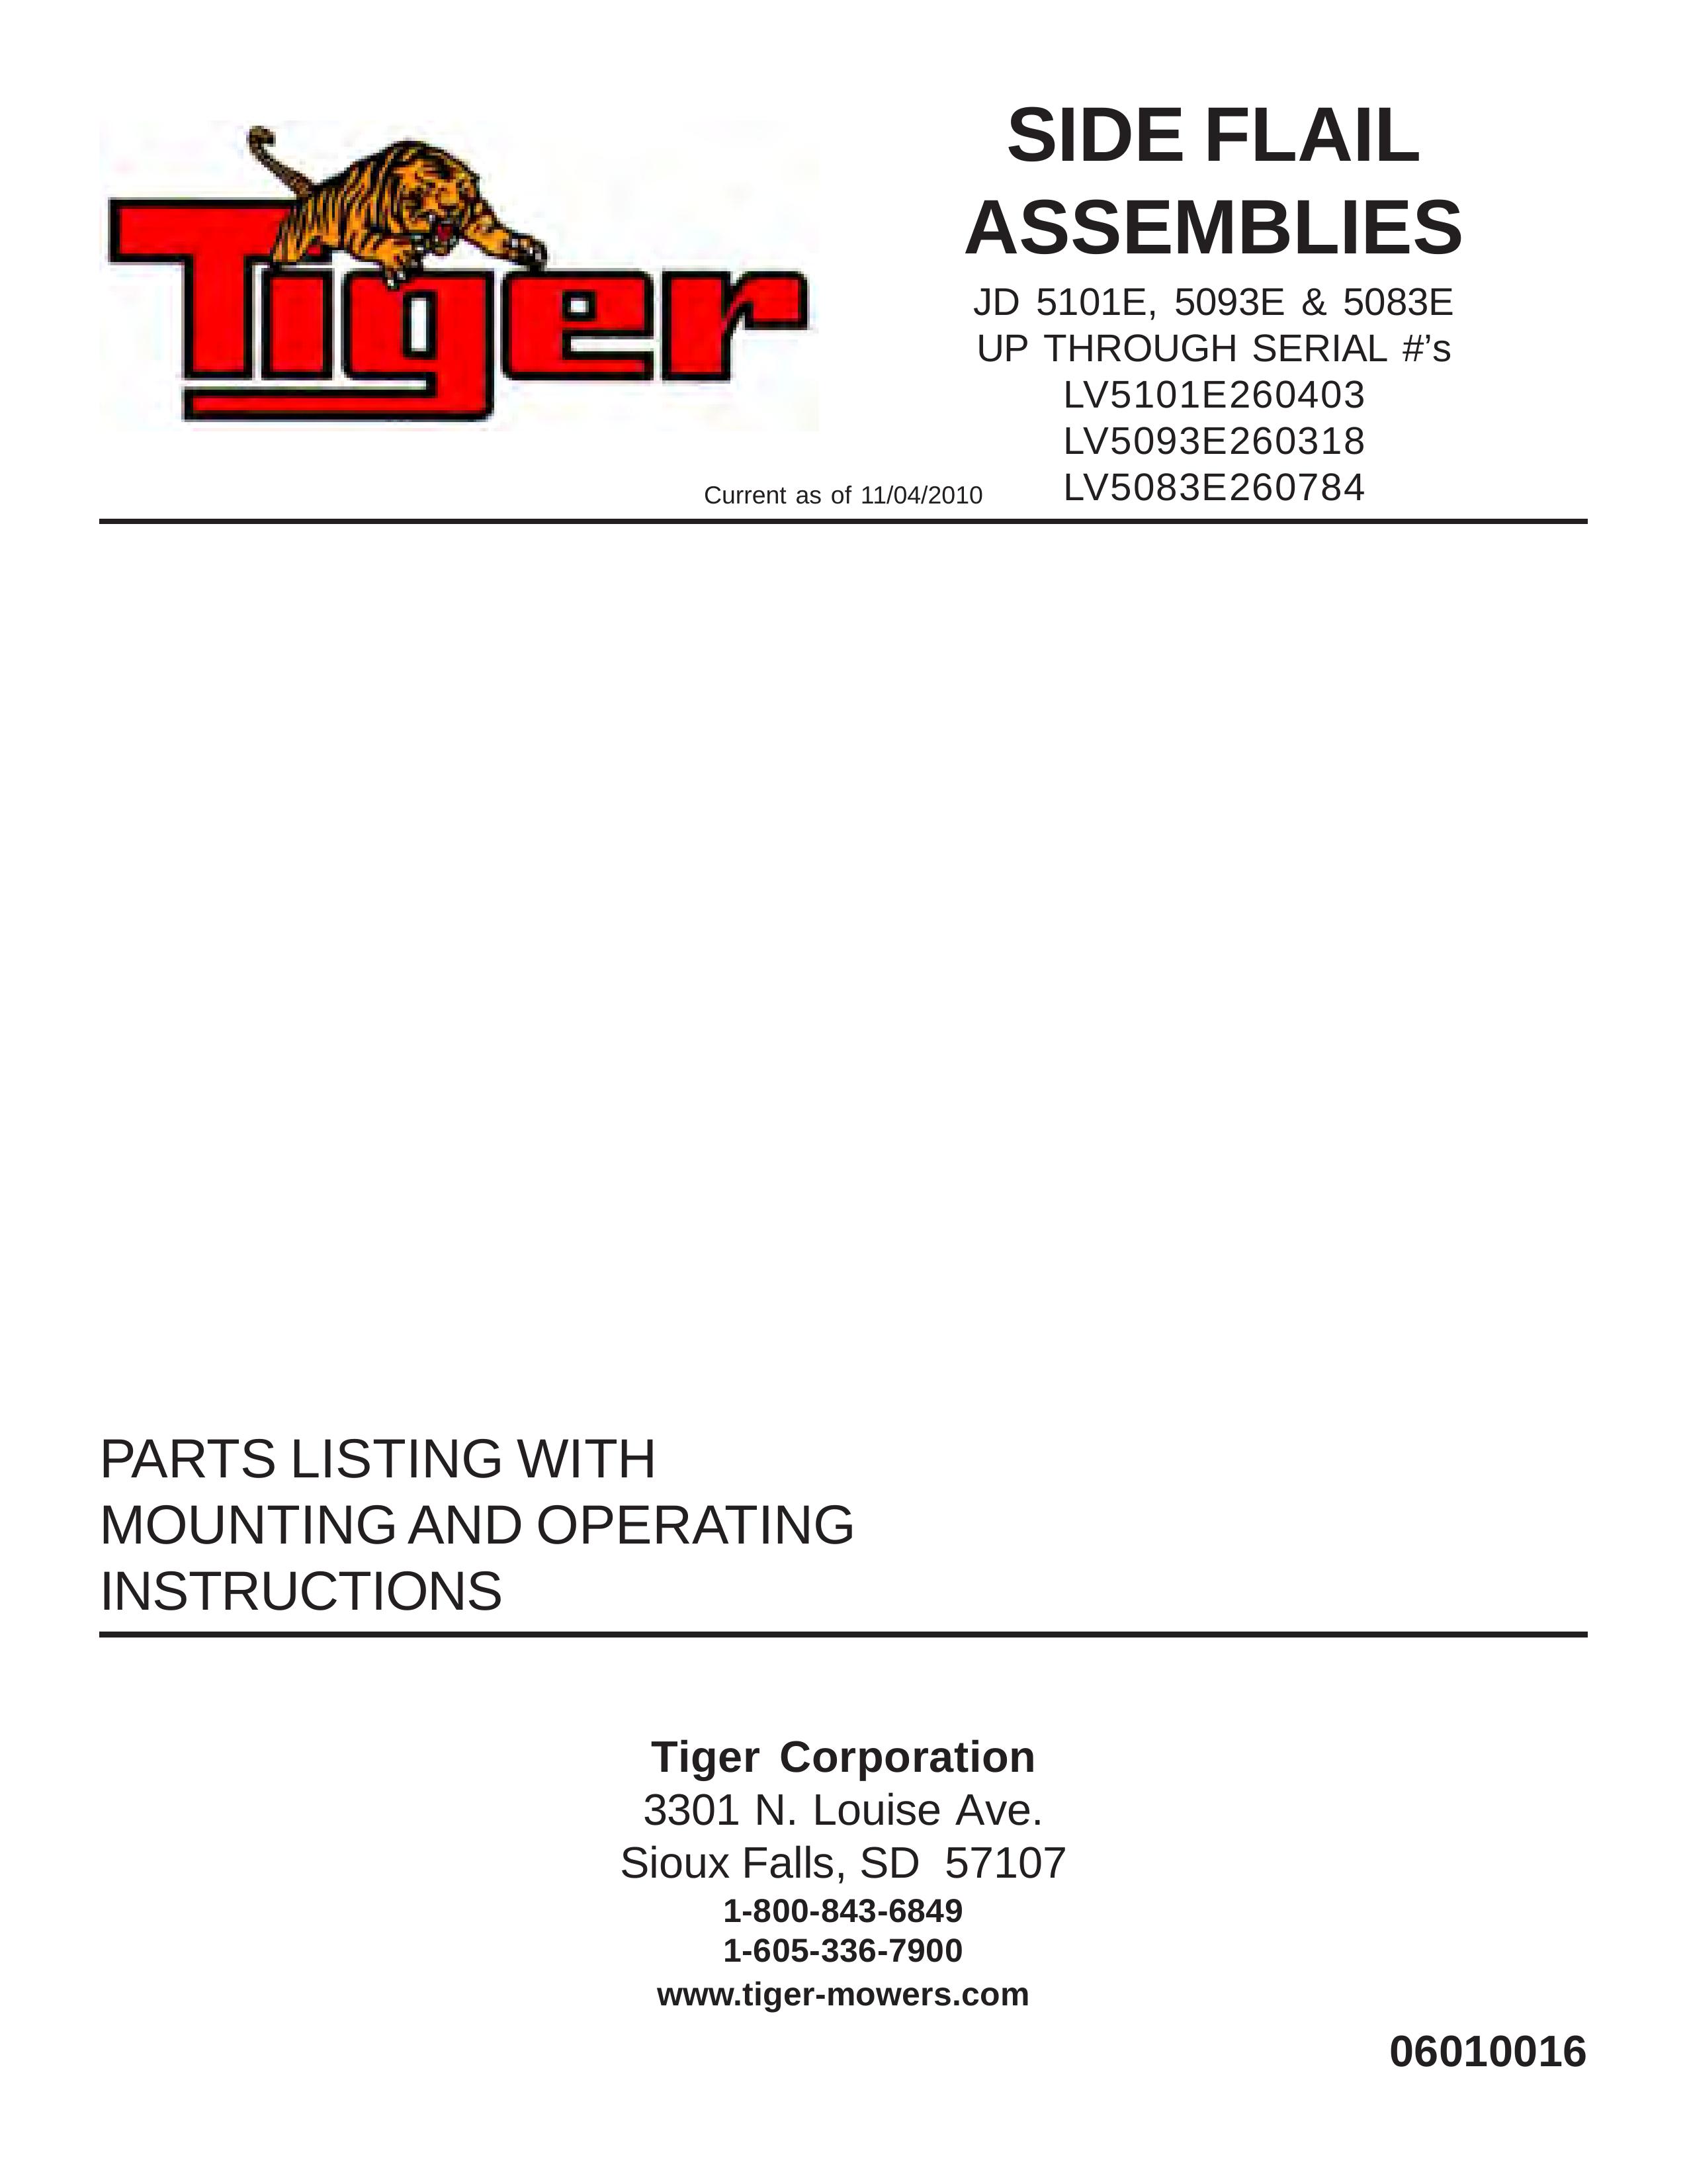 Tiger JD 5083E Lawn Mower User Manual